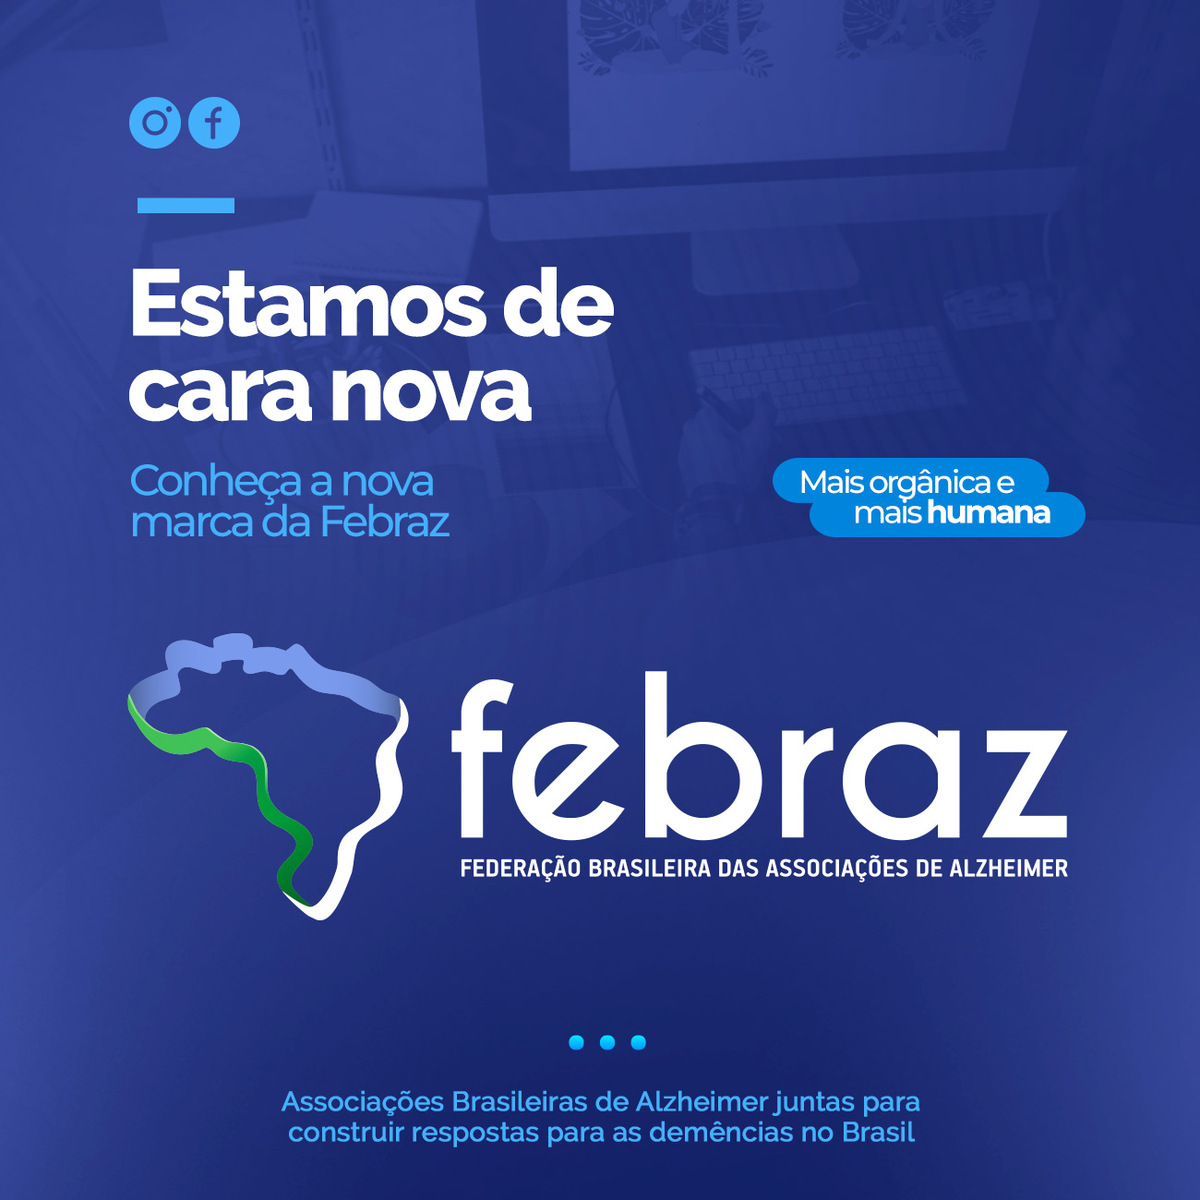 Brand new logo. Check it out the new brand for Febraz - Brazilian Alzheimer's Associations Federation. More organic and more humanized. Brazilians Alzheimer's Associations building responses to Dementia together in Brazil. #Febraz #ABRAz #Apaz #IAB #INME #Alz #Alzheimer #dementia